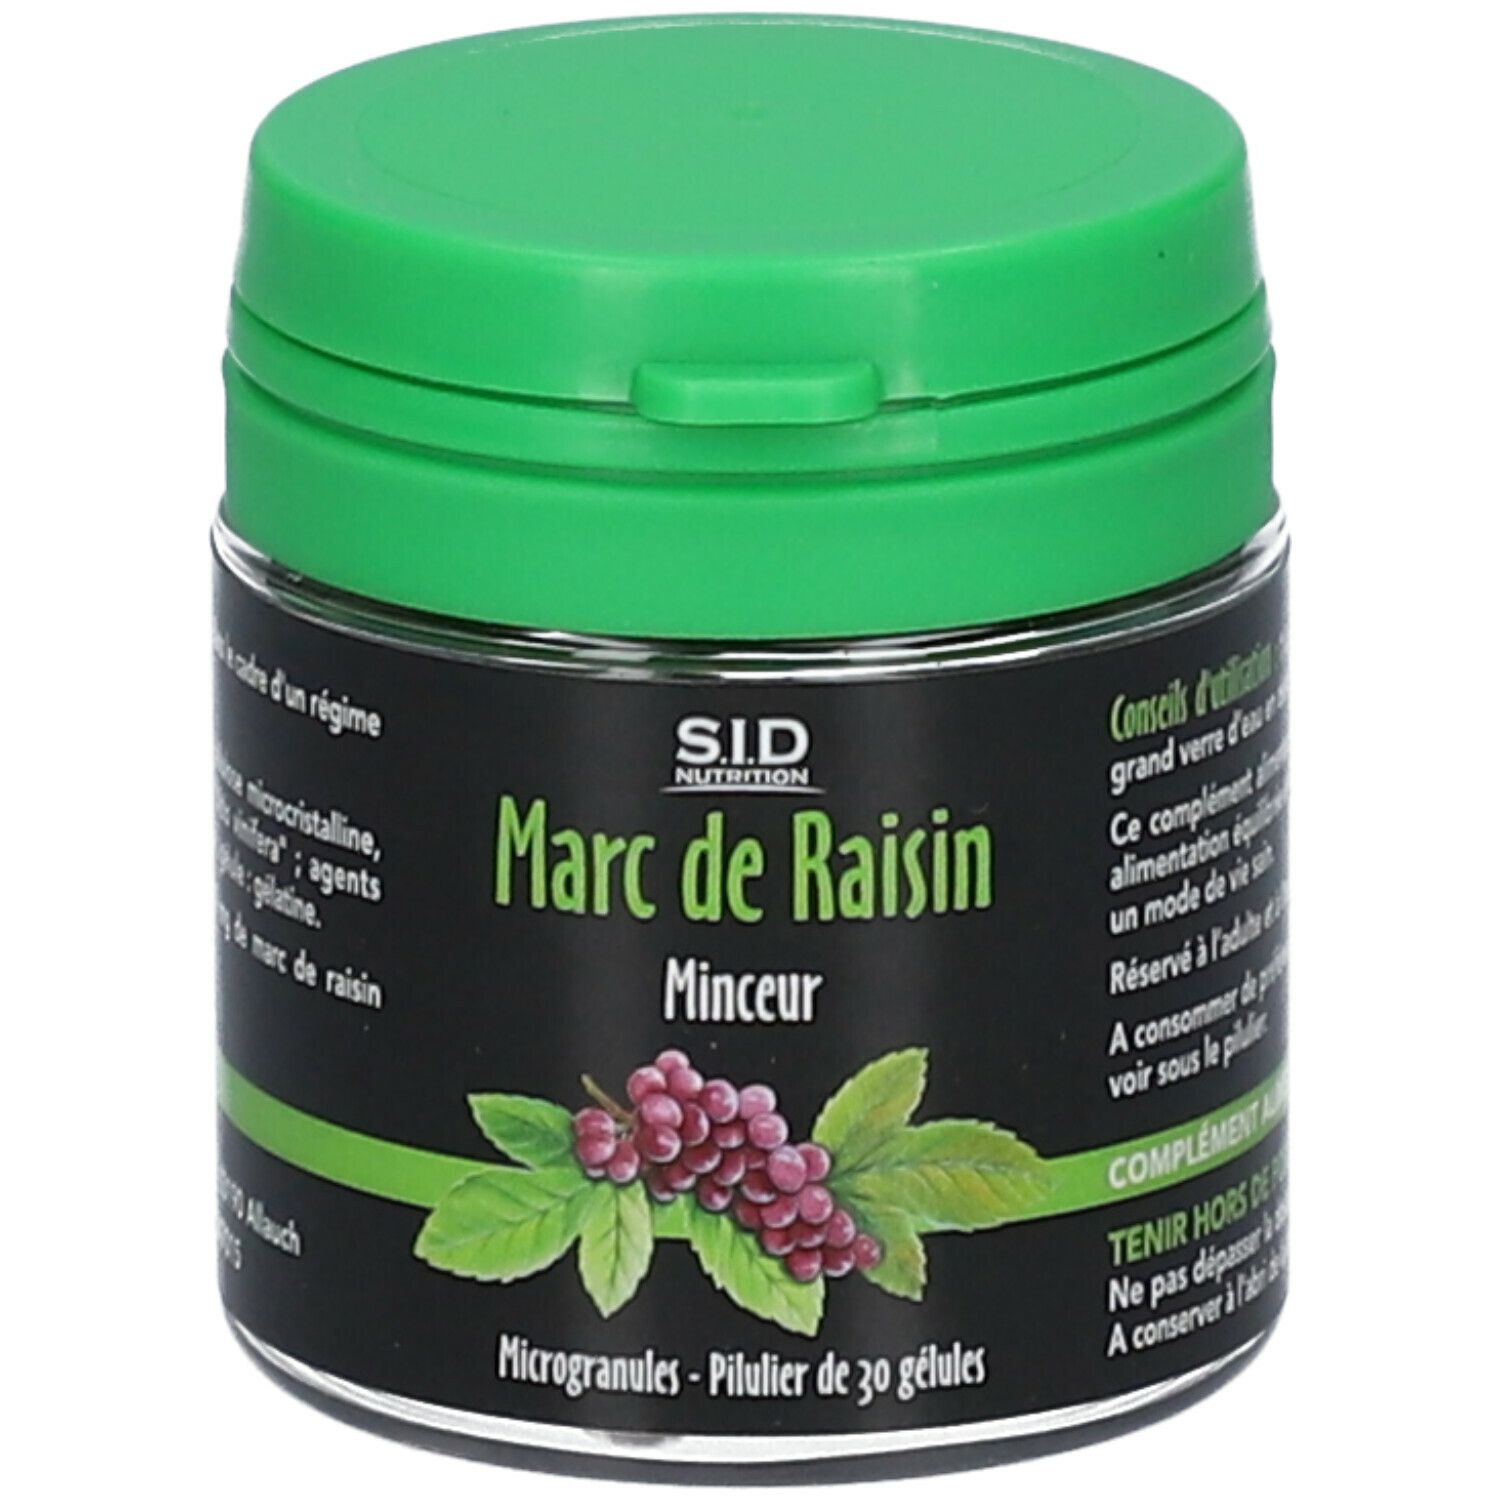 SID Nutrition Marc de raisin